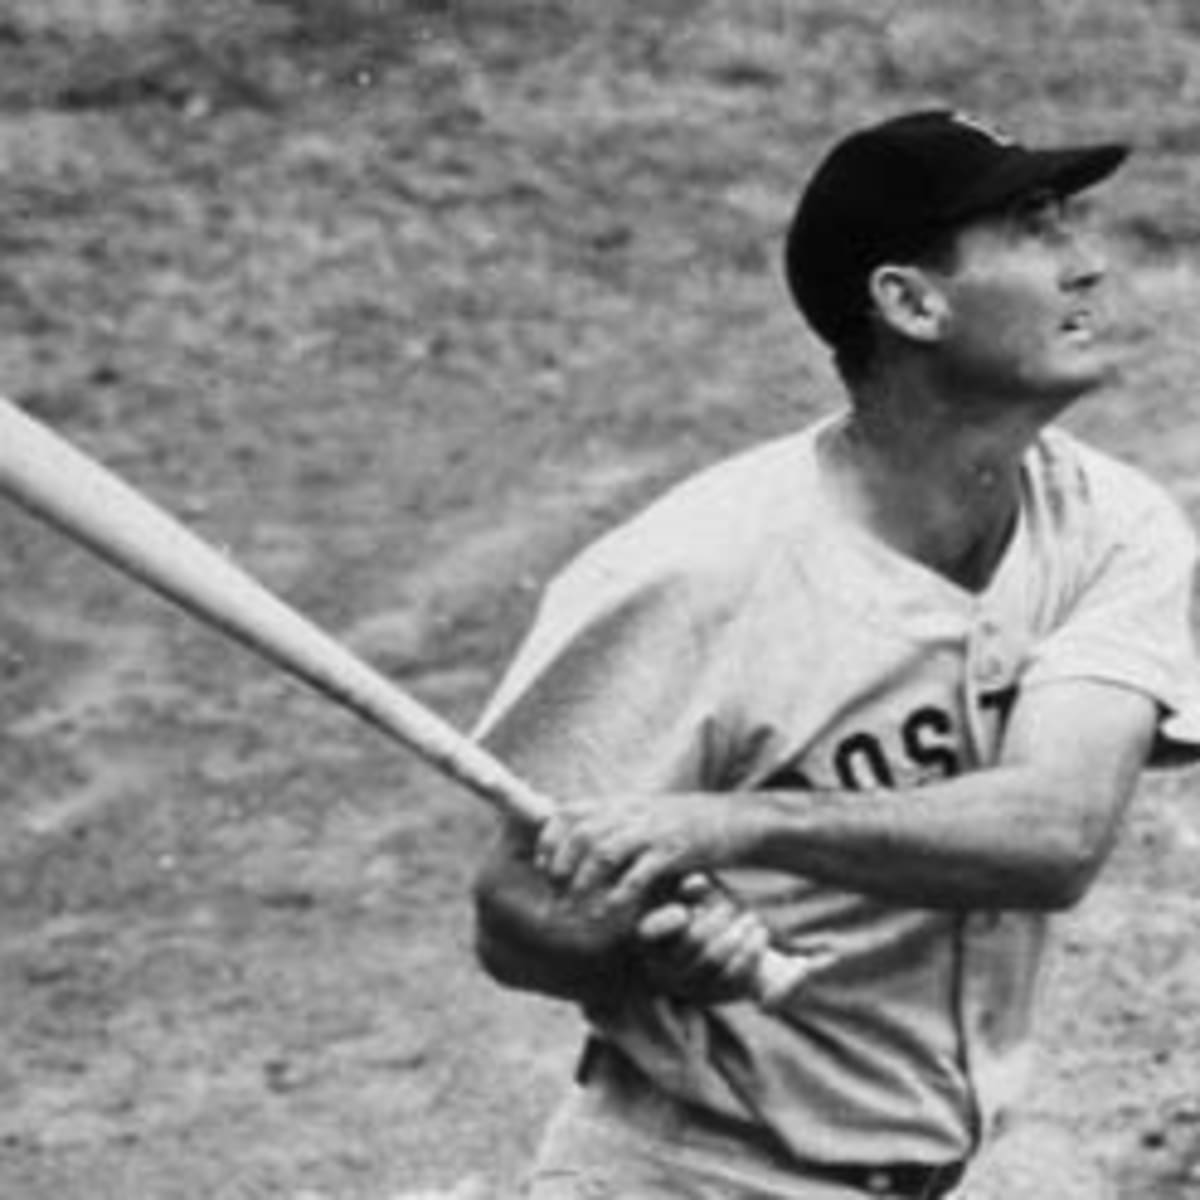 Boston Red Sox star and American League batting champion Carl